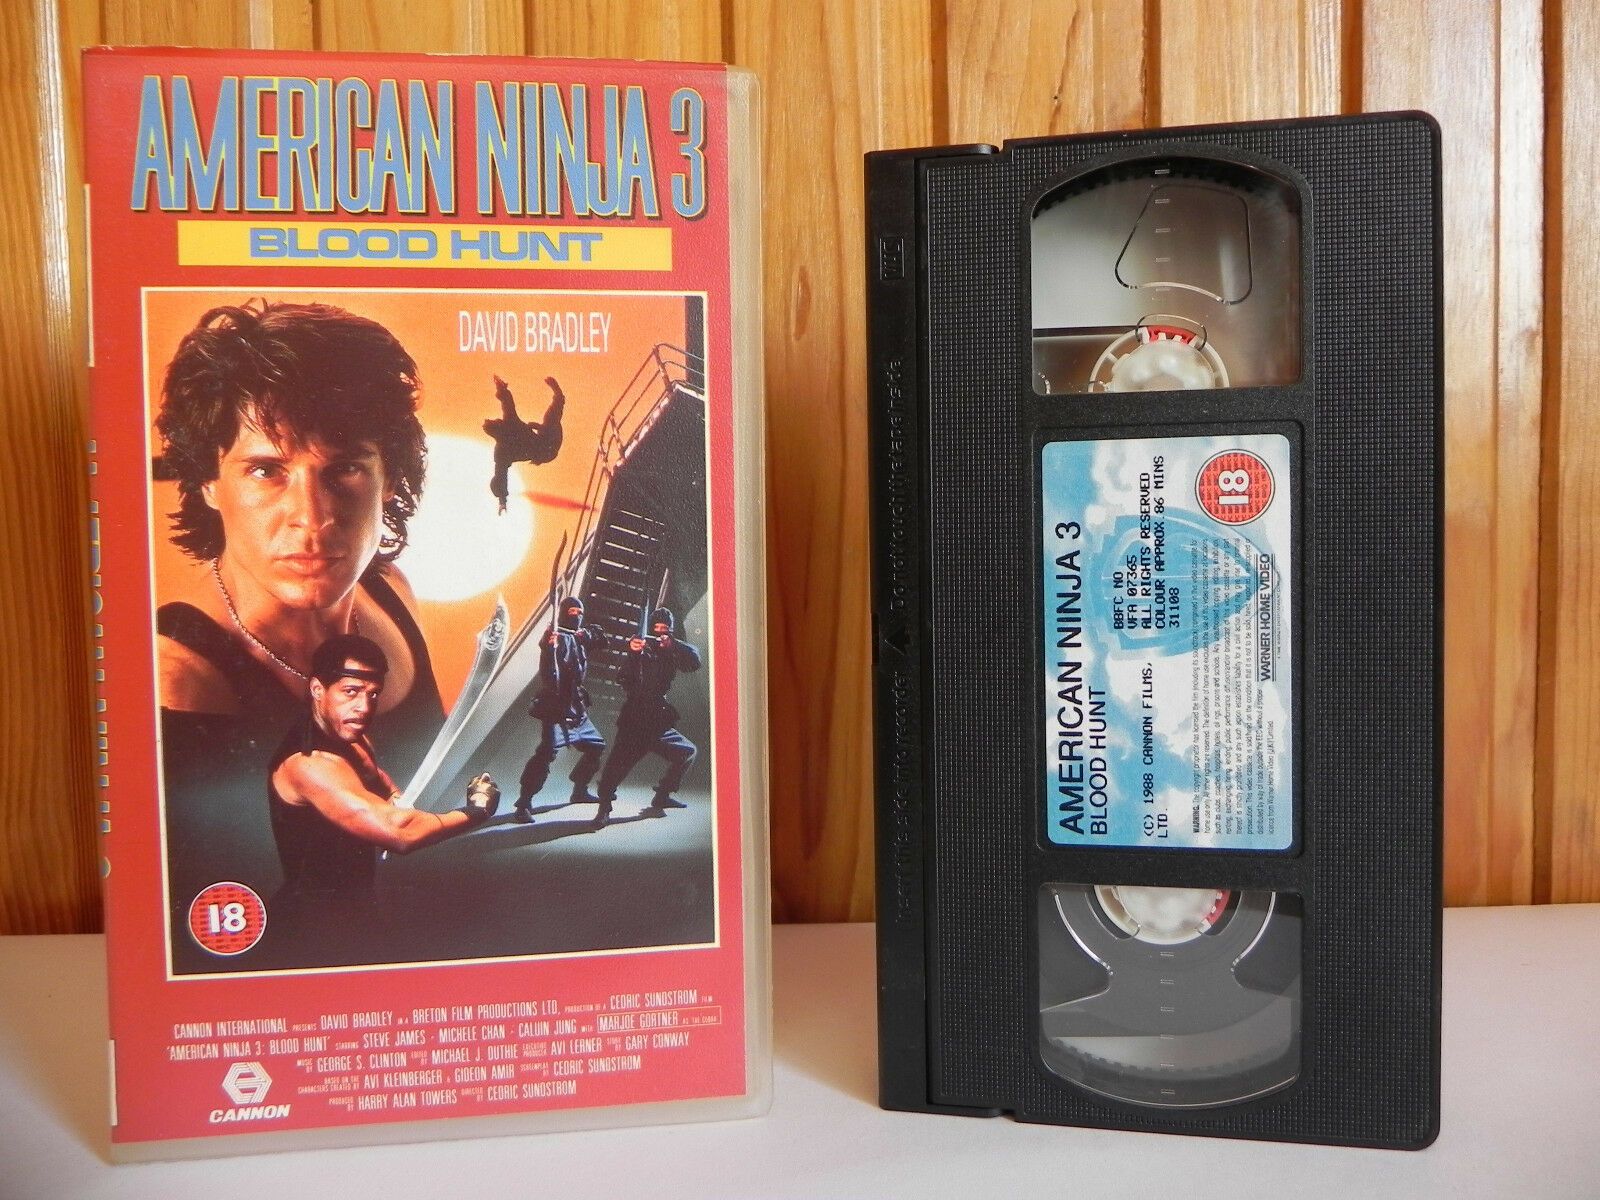 American Ninja 3: Blood Hunt - Cannon - Cert (18) - Martial Arts - Pal VHS-